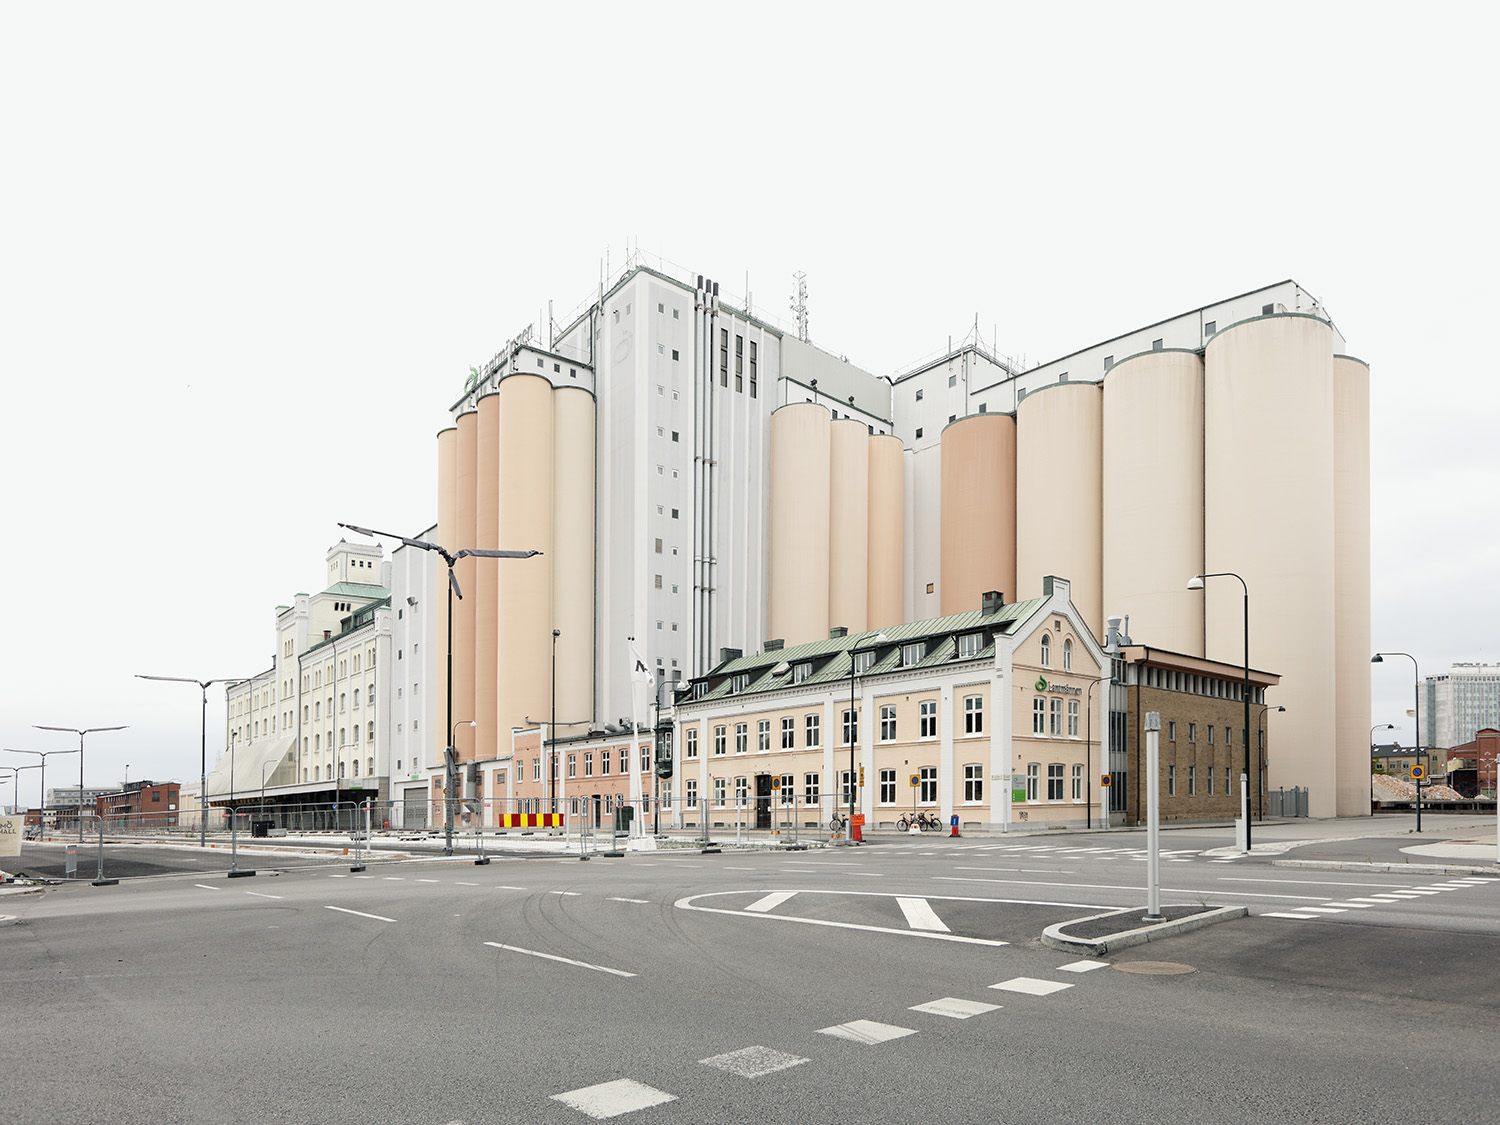 Industrial Building
-
Malmö, Sweden